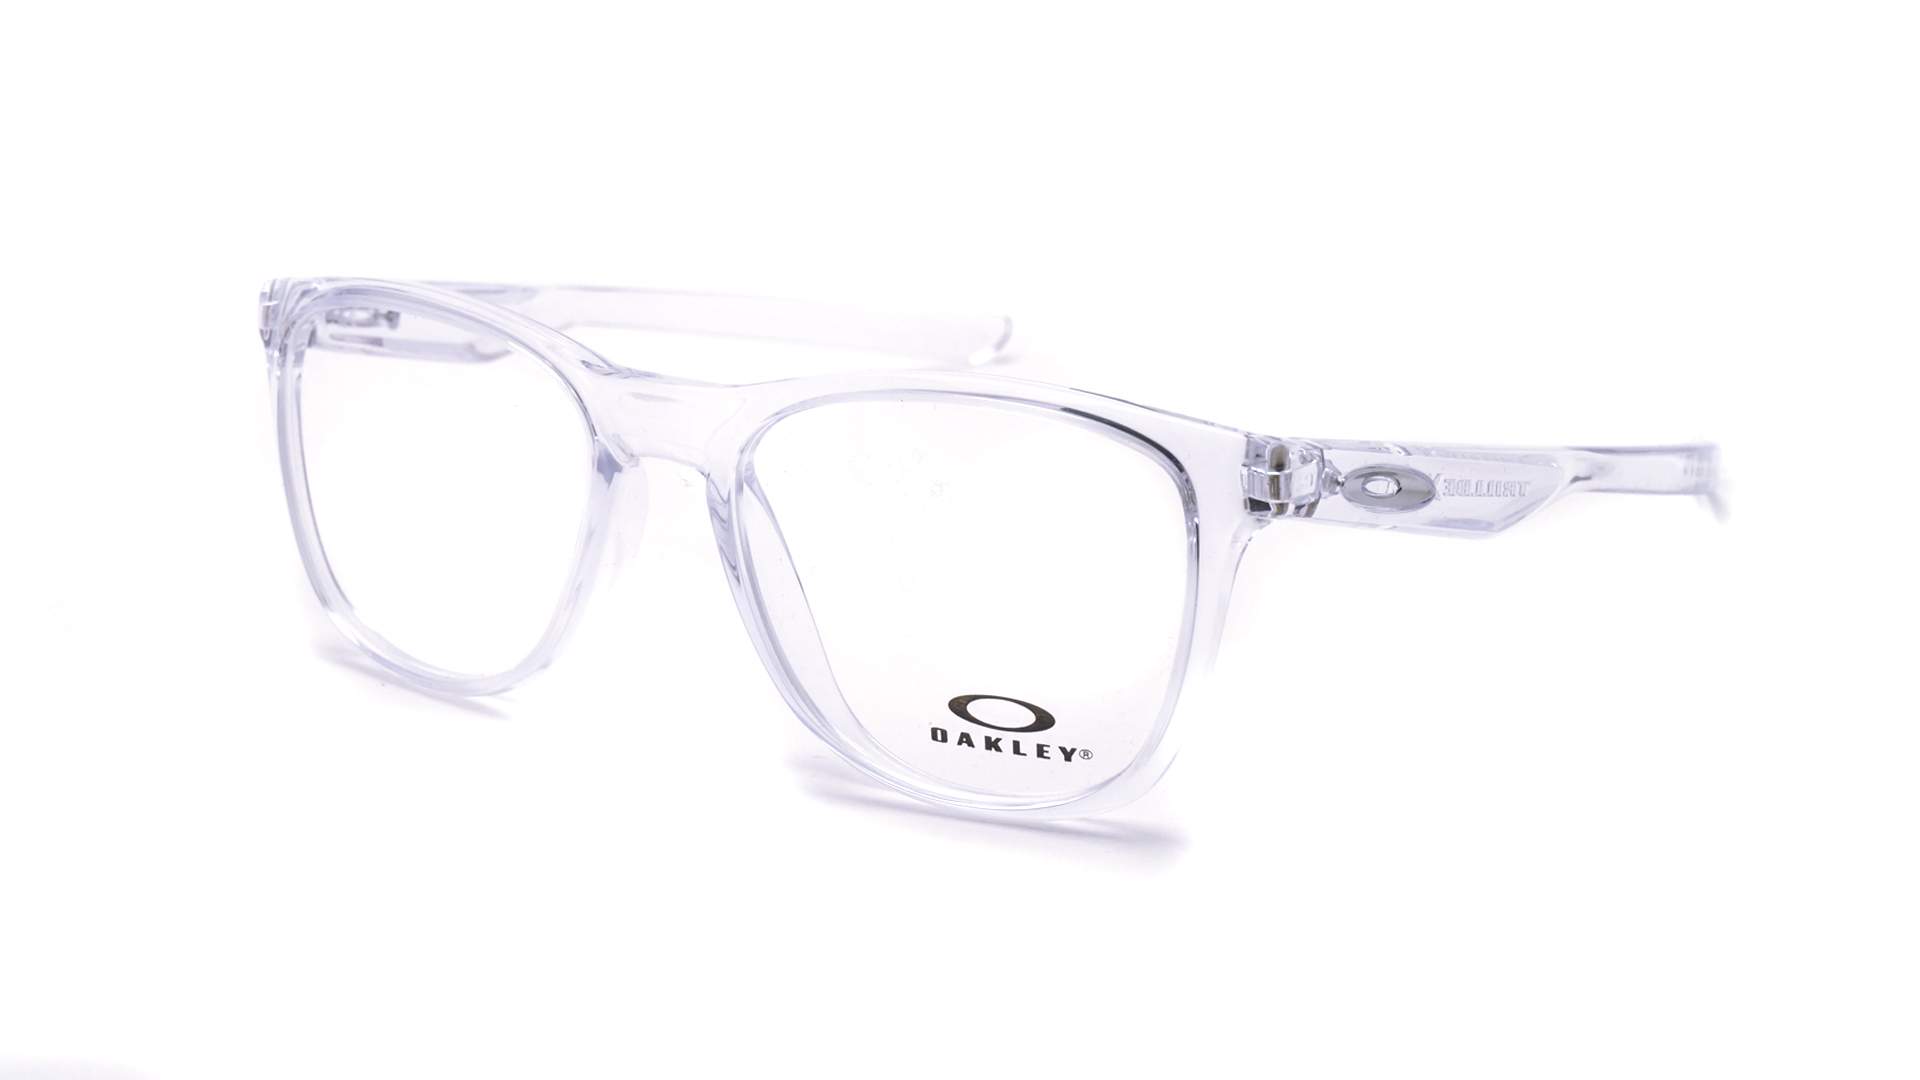 oakley eyeglasses for women